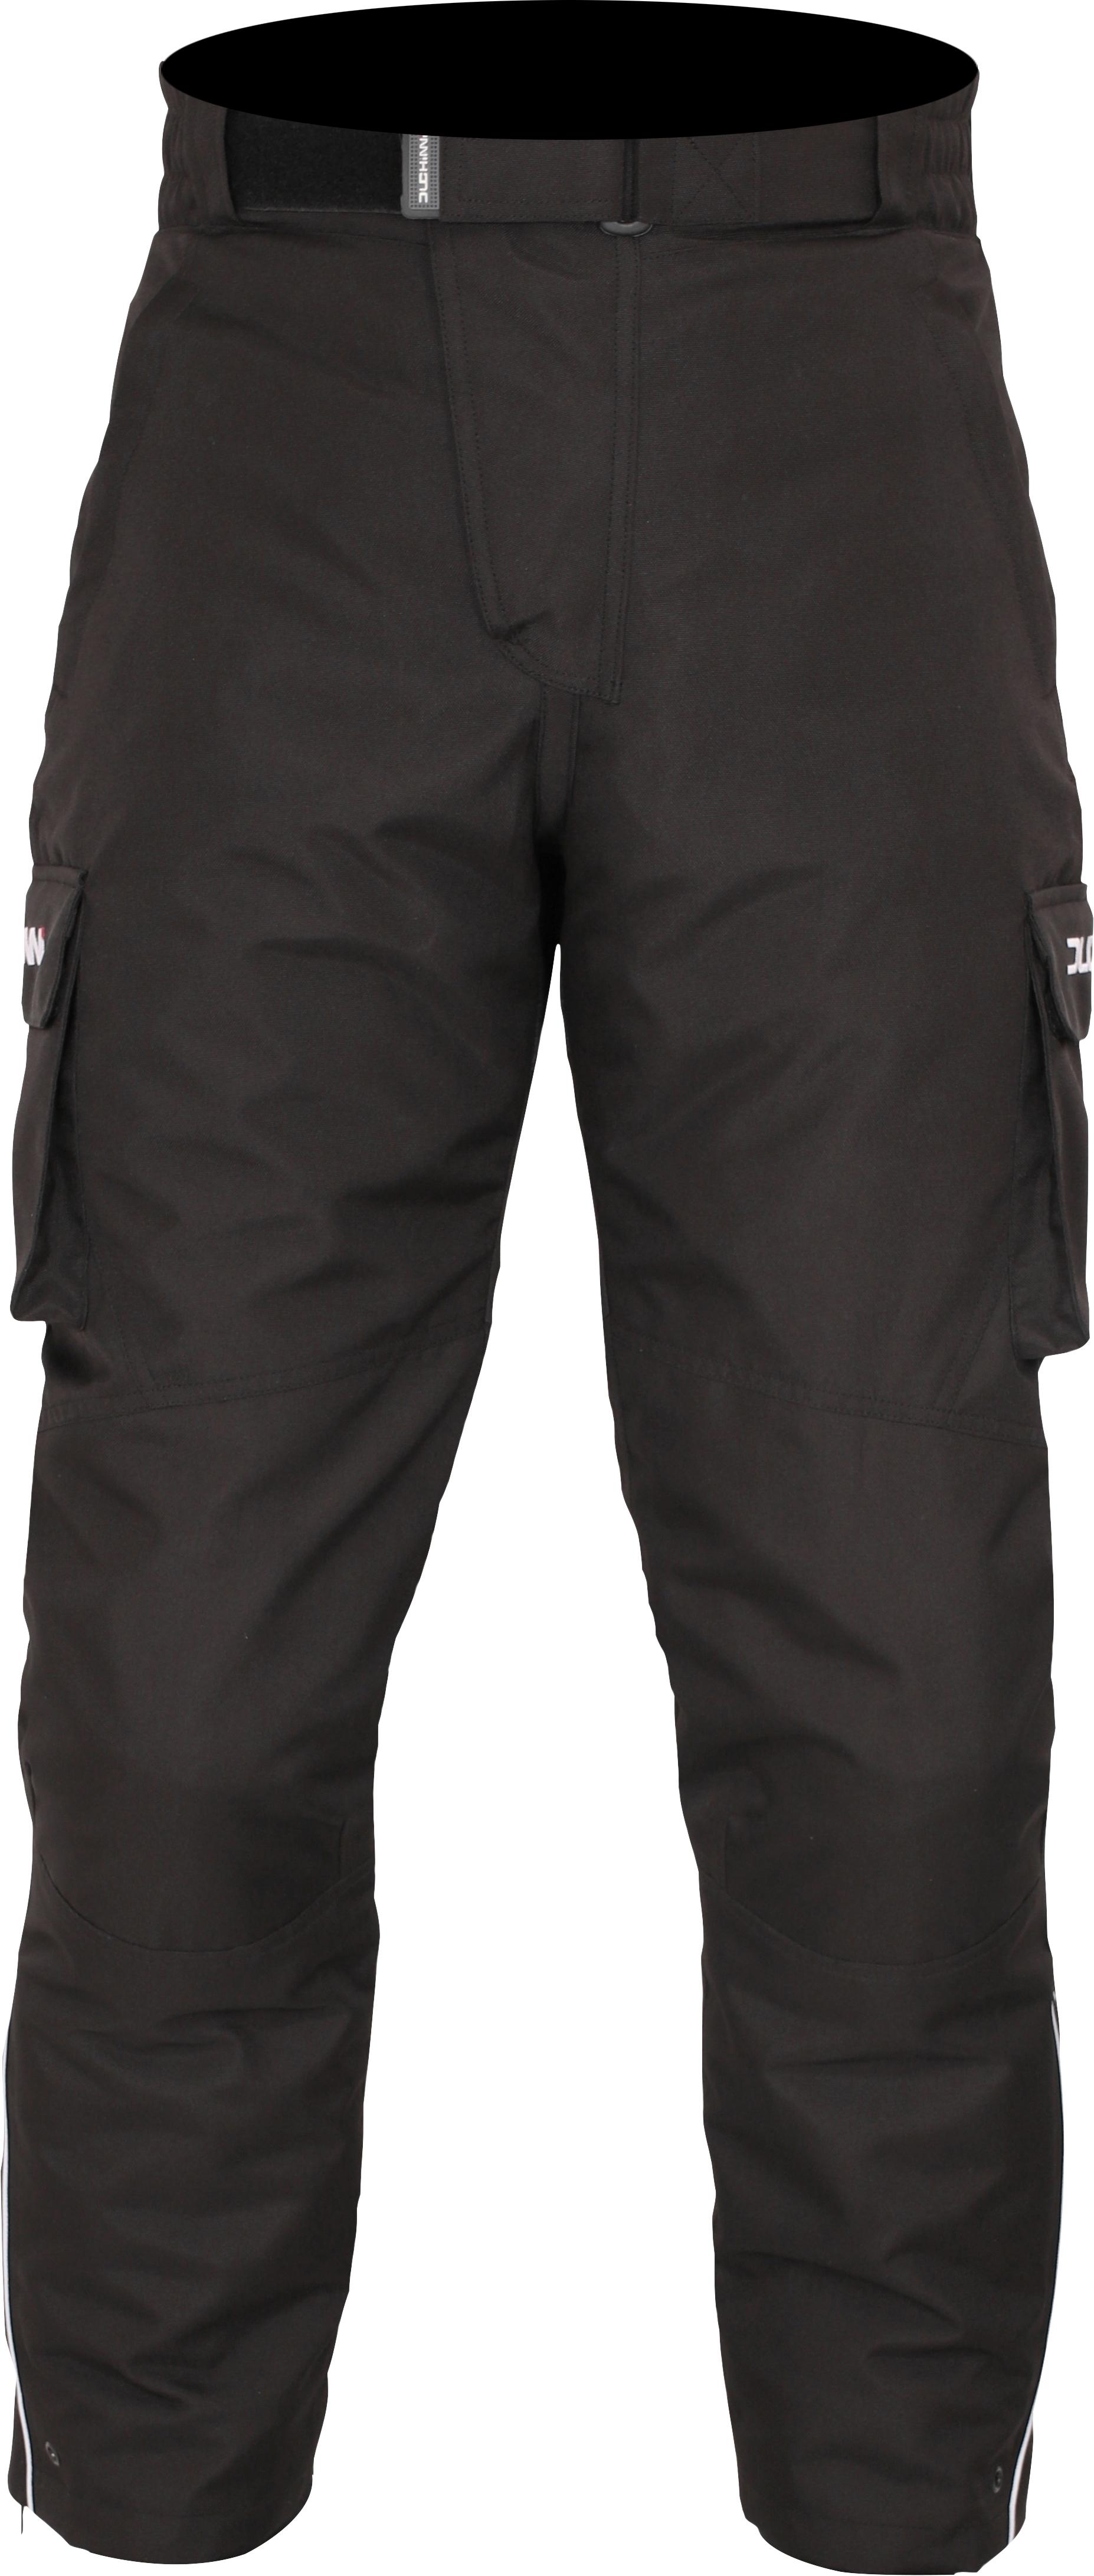 Duchinni Pacific Motorcycle Short Jeans - Black, 6Xl